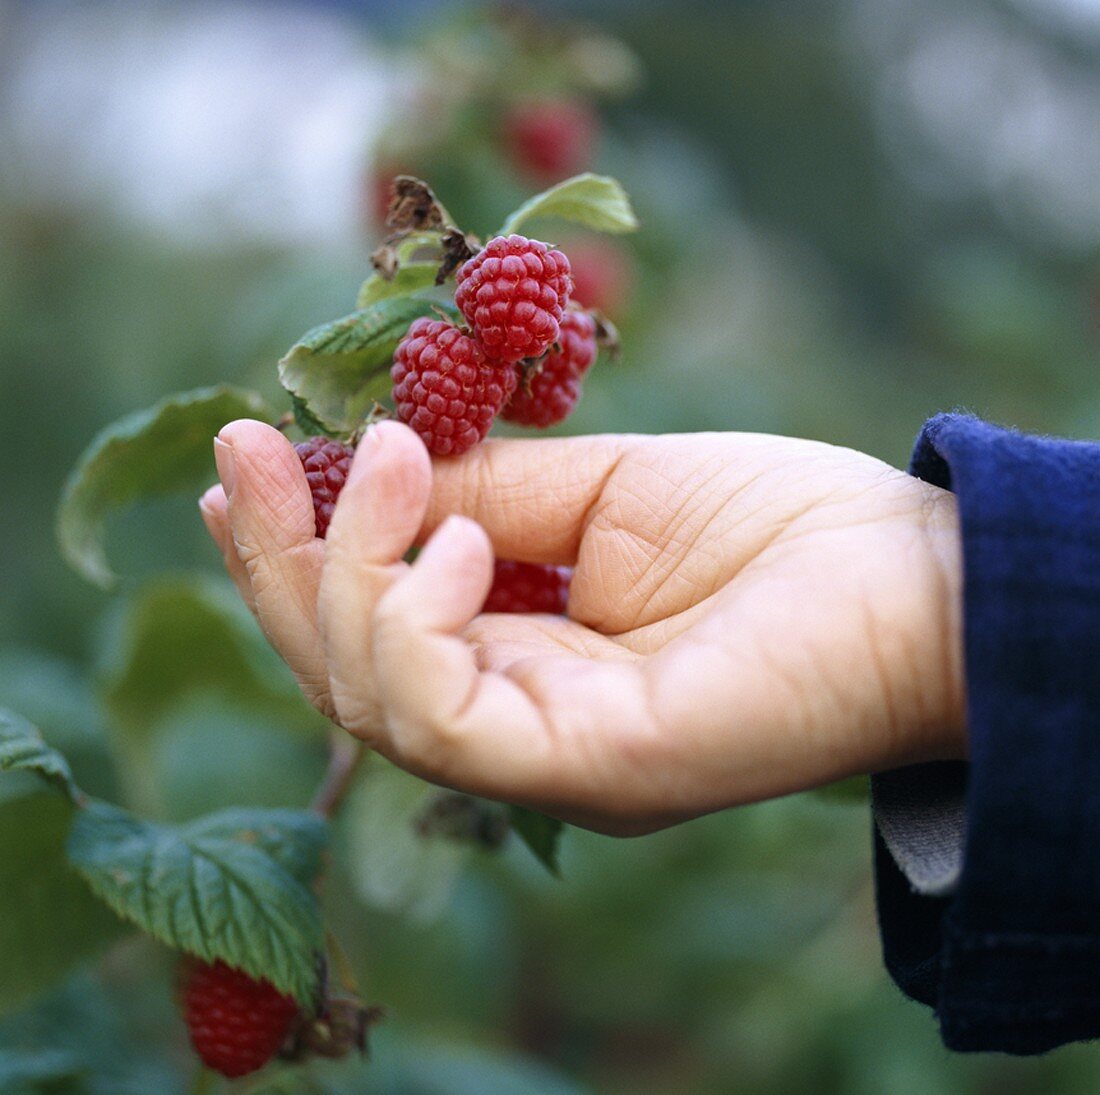 Picking raspberries